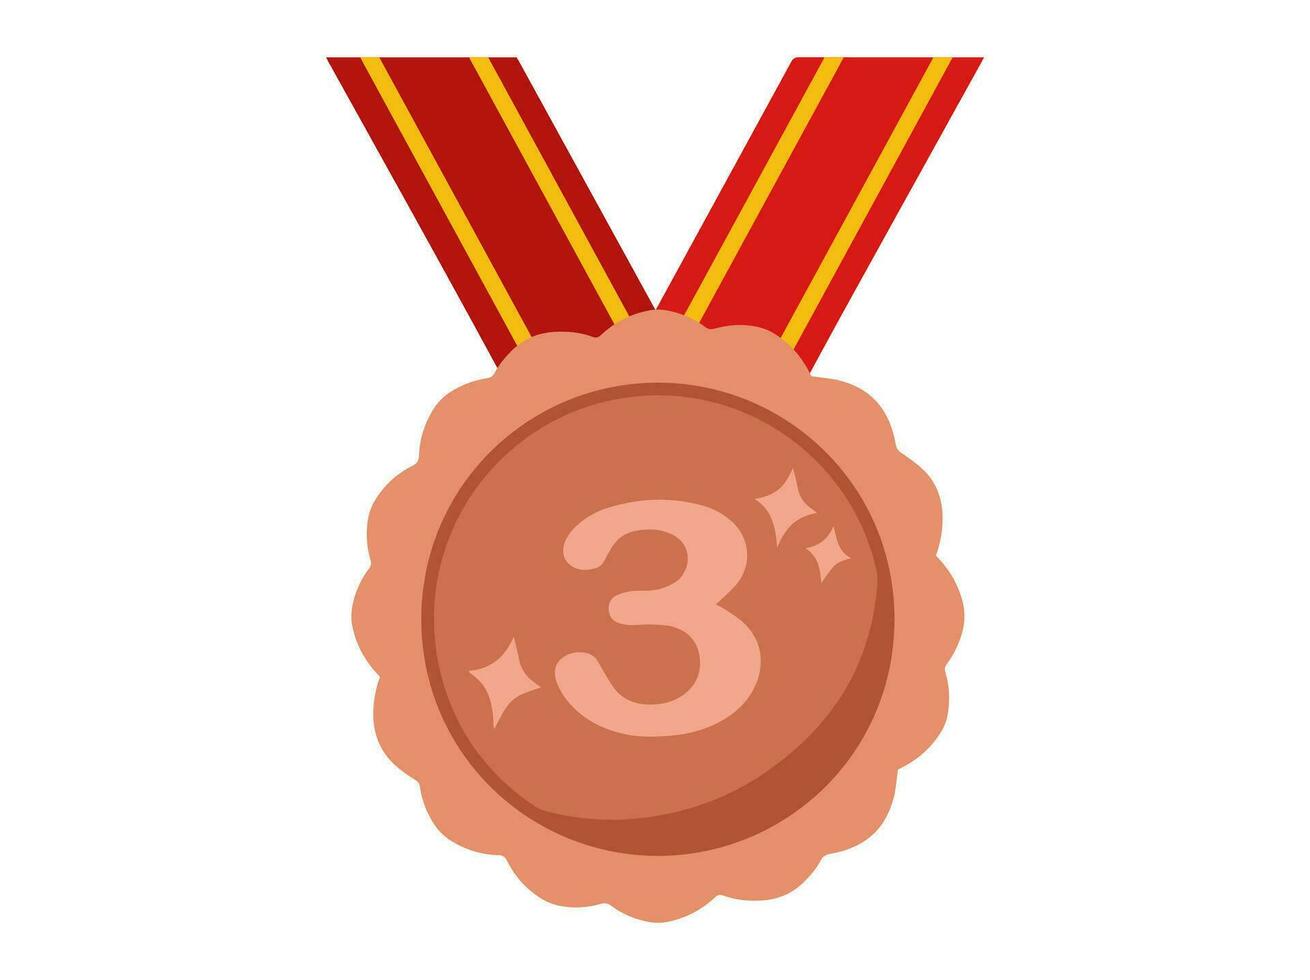 brons medalj 3:e plats pris vektor